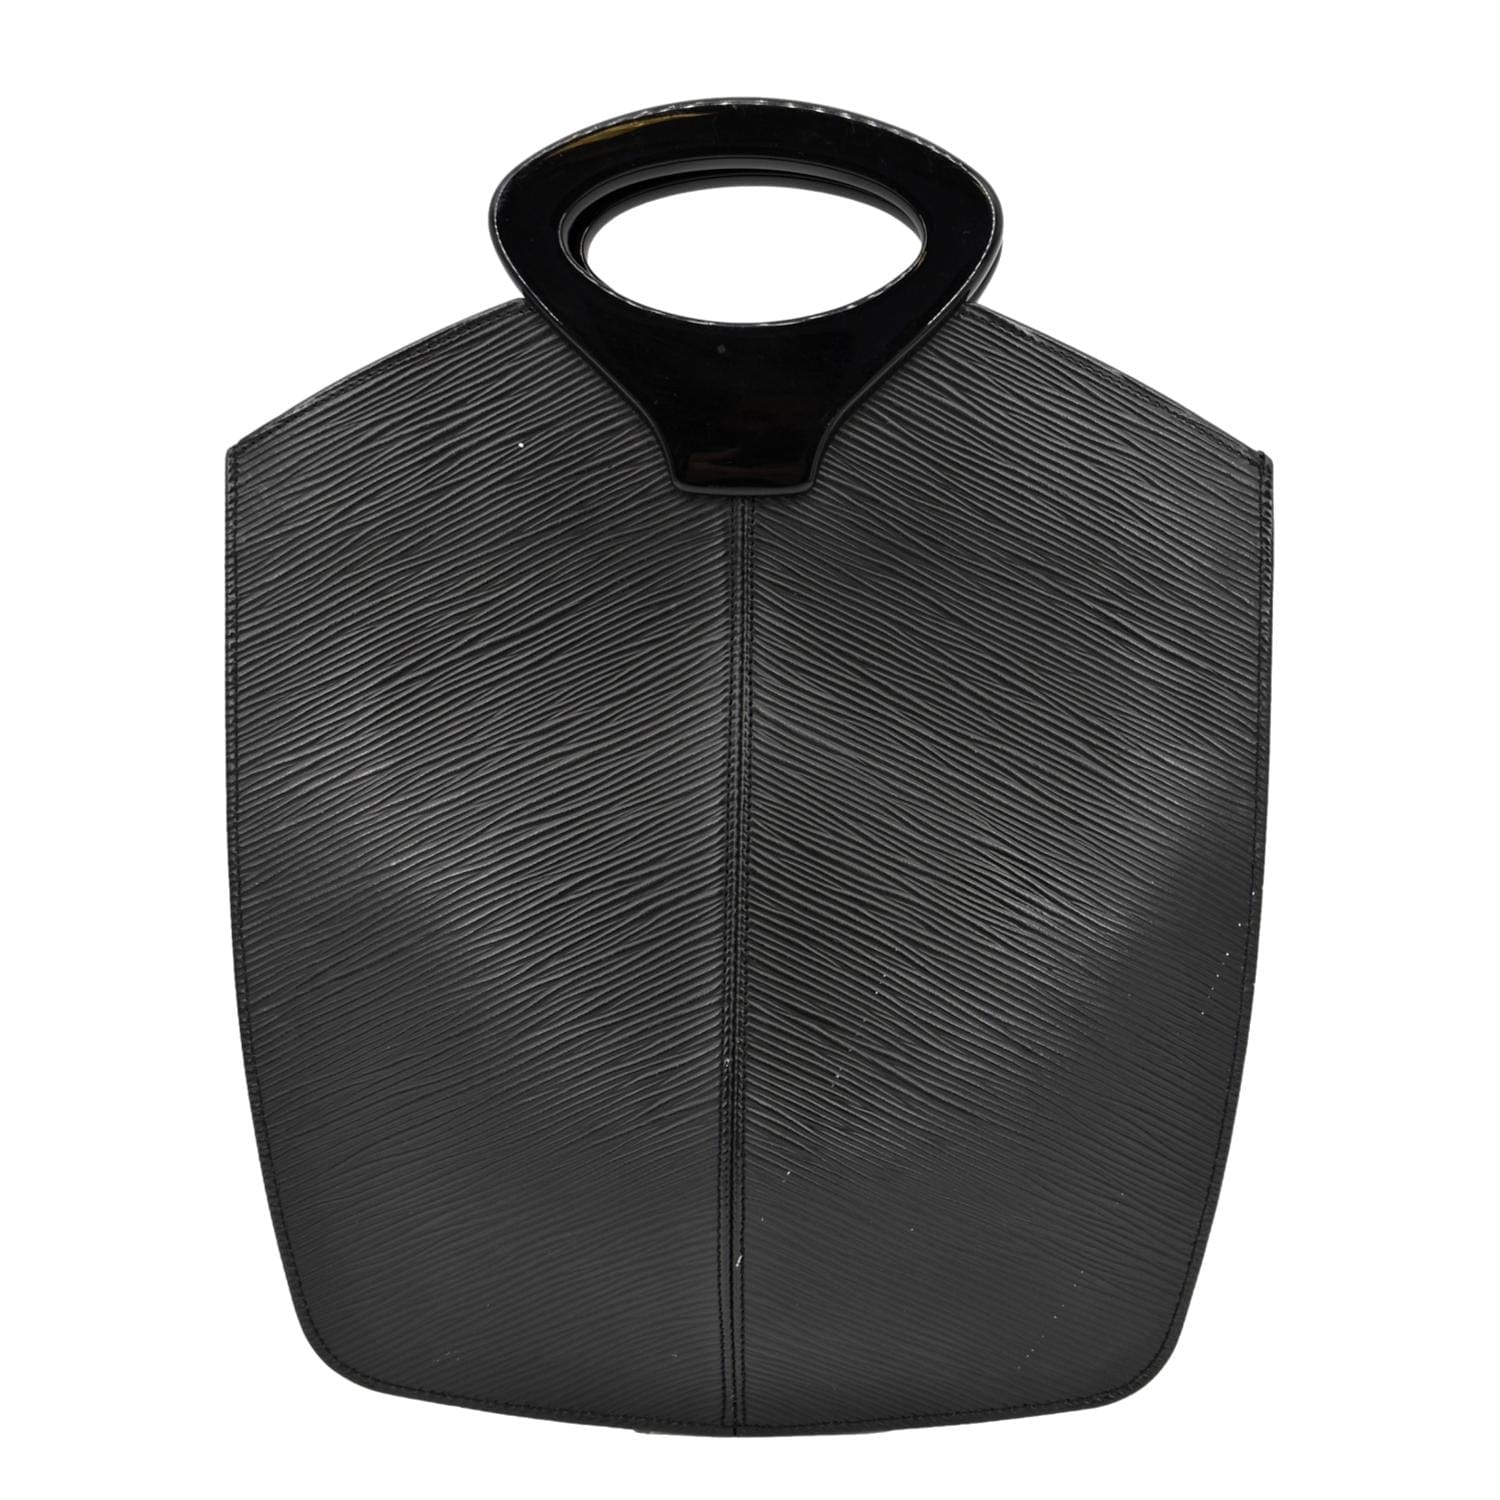 NéoNoé BB Epi Leather - Women - Handbags